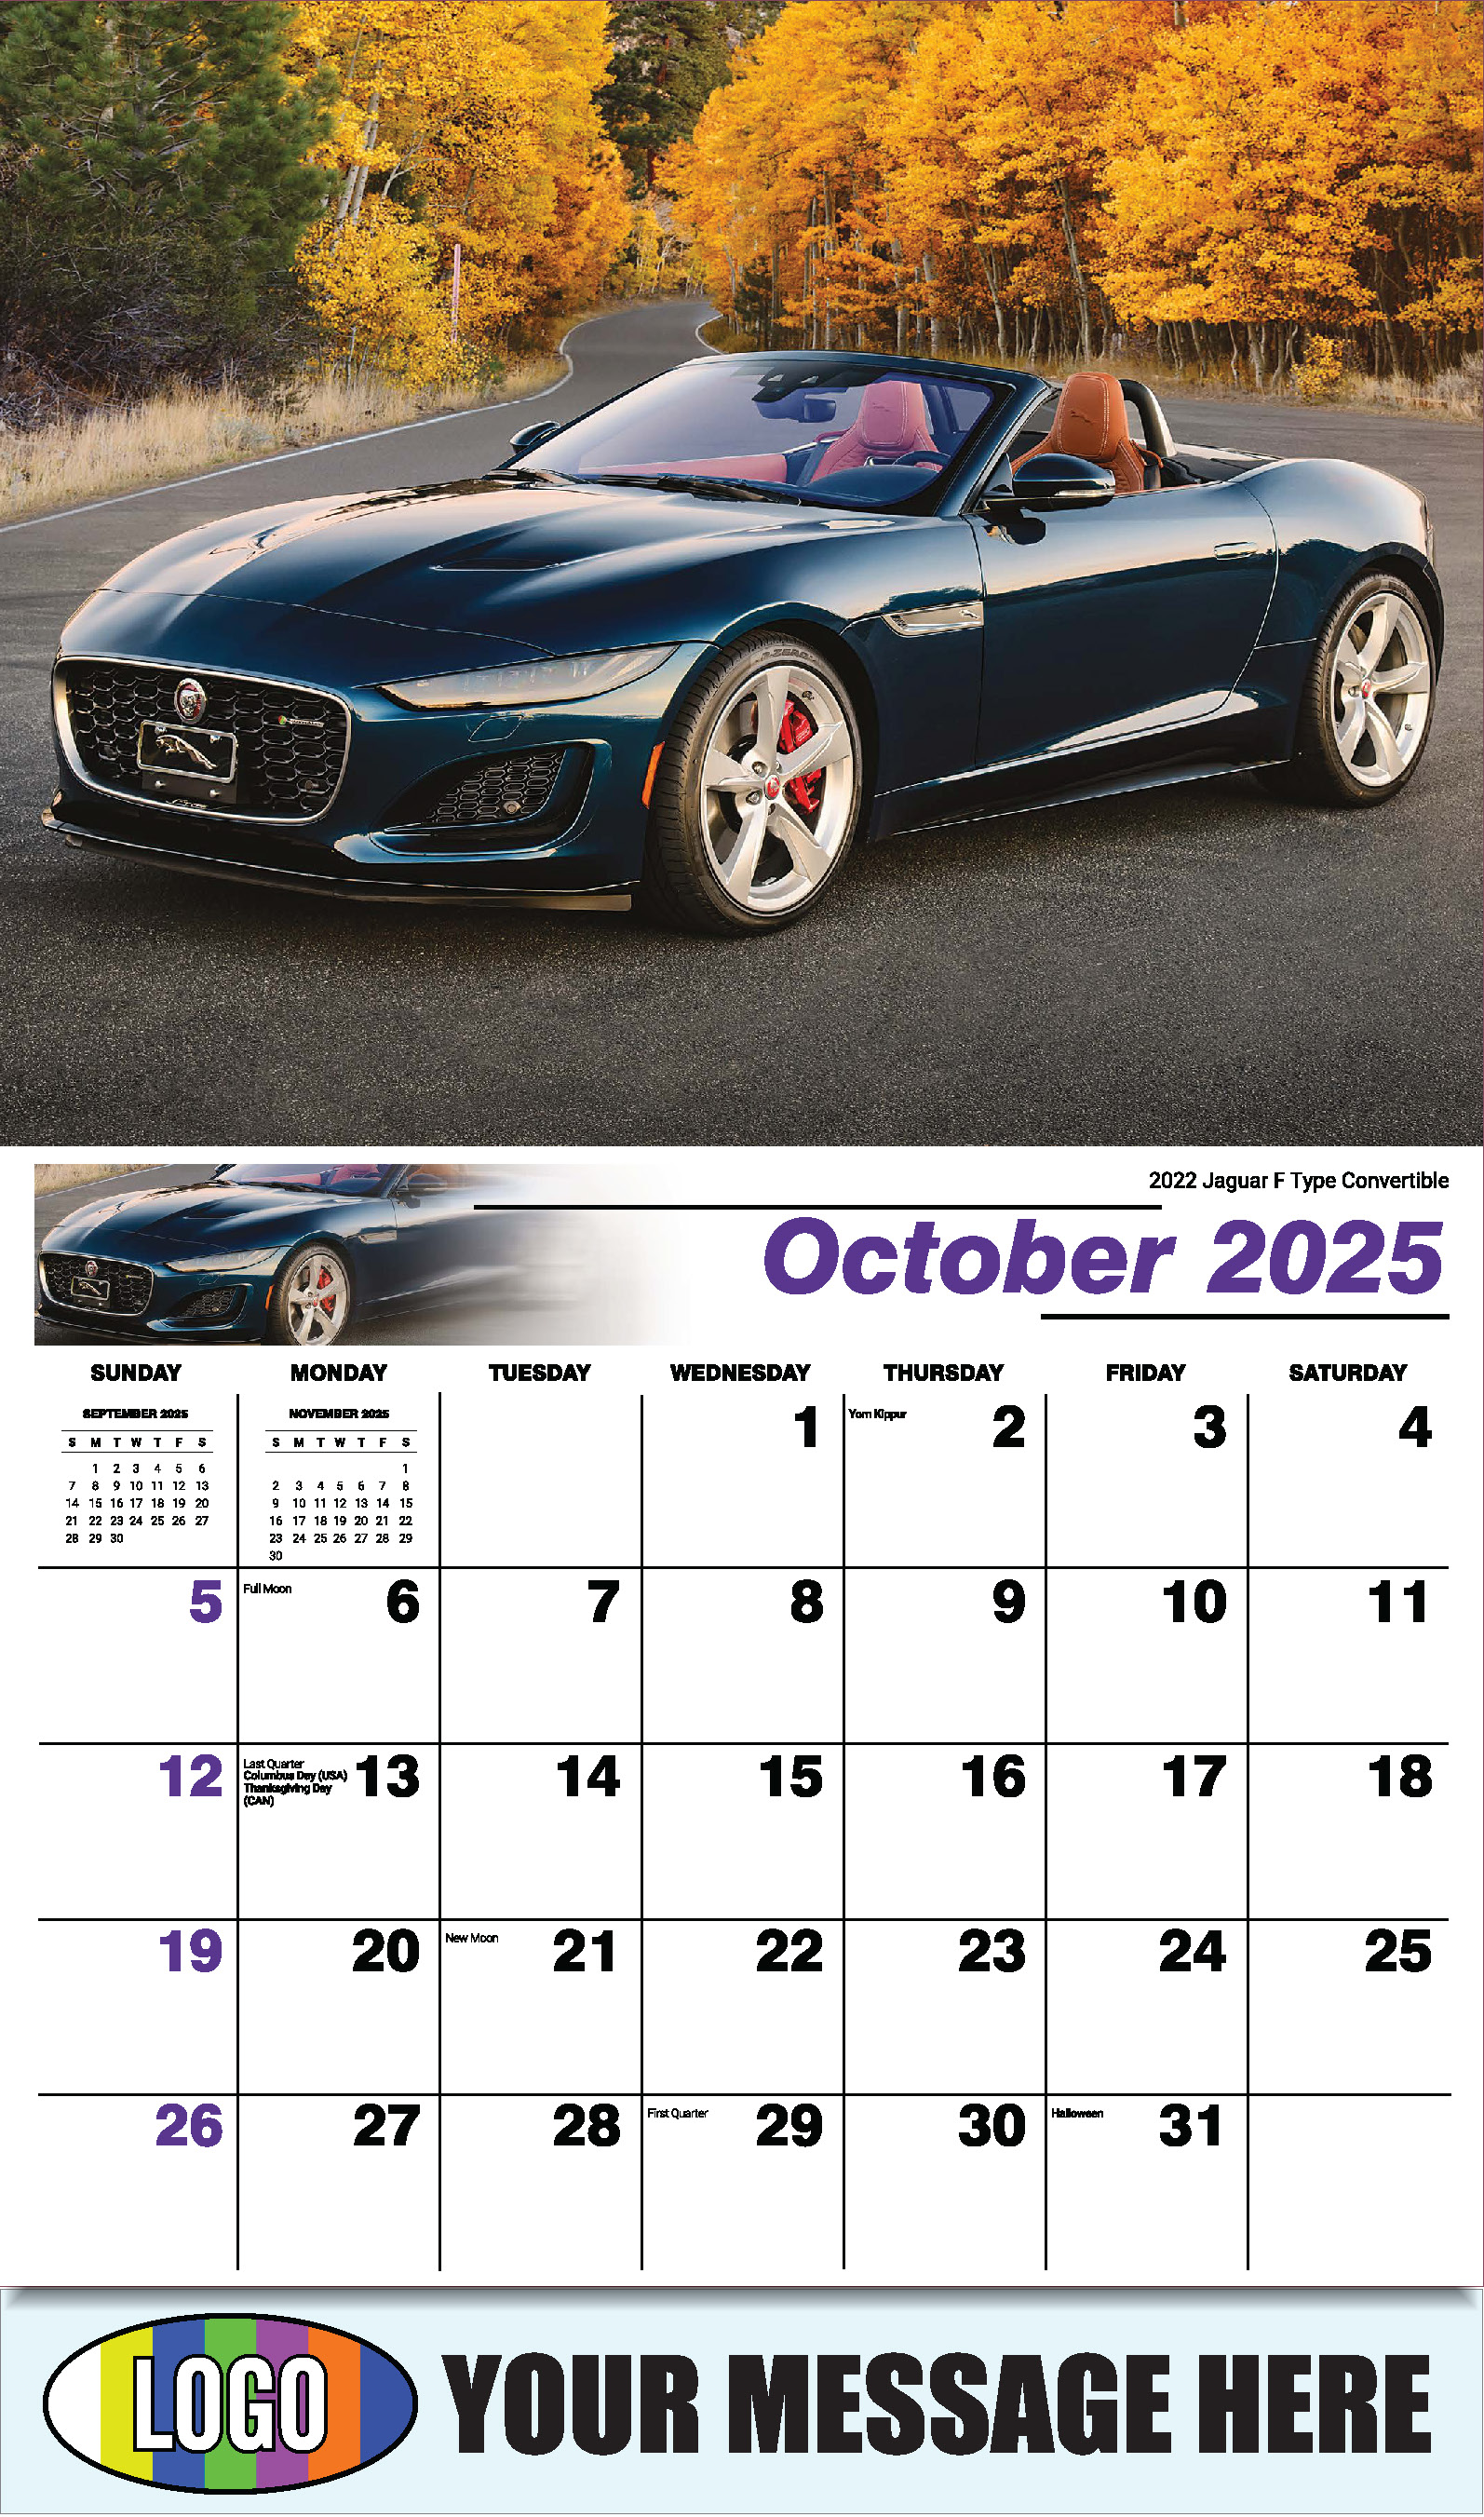 Exotic Cars 2025 Automotive Business Advertising Calendar - October